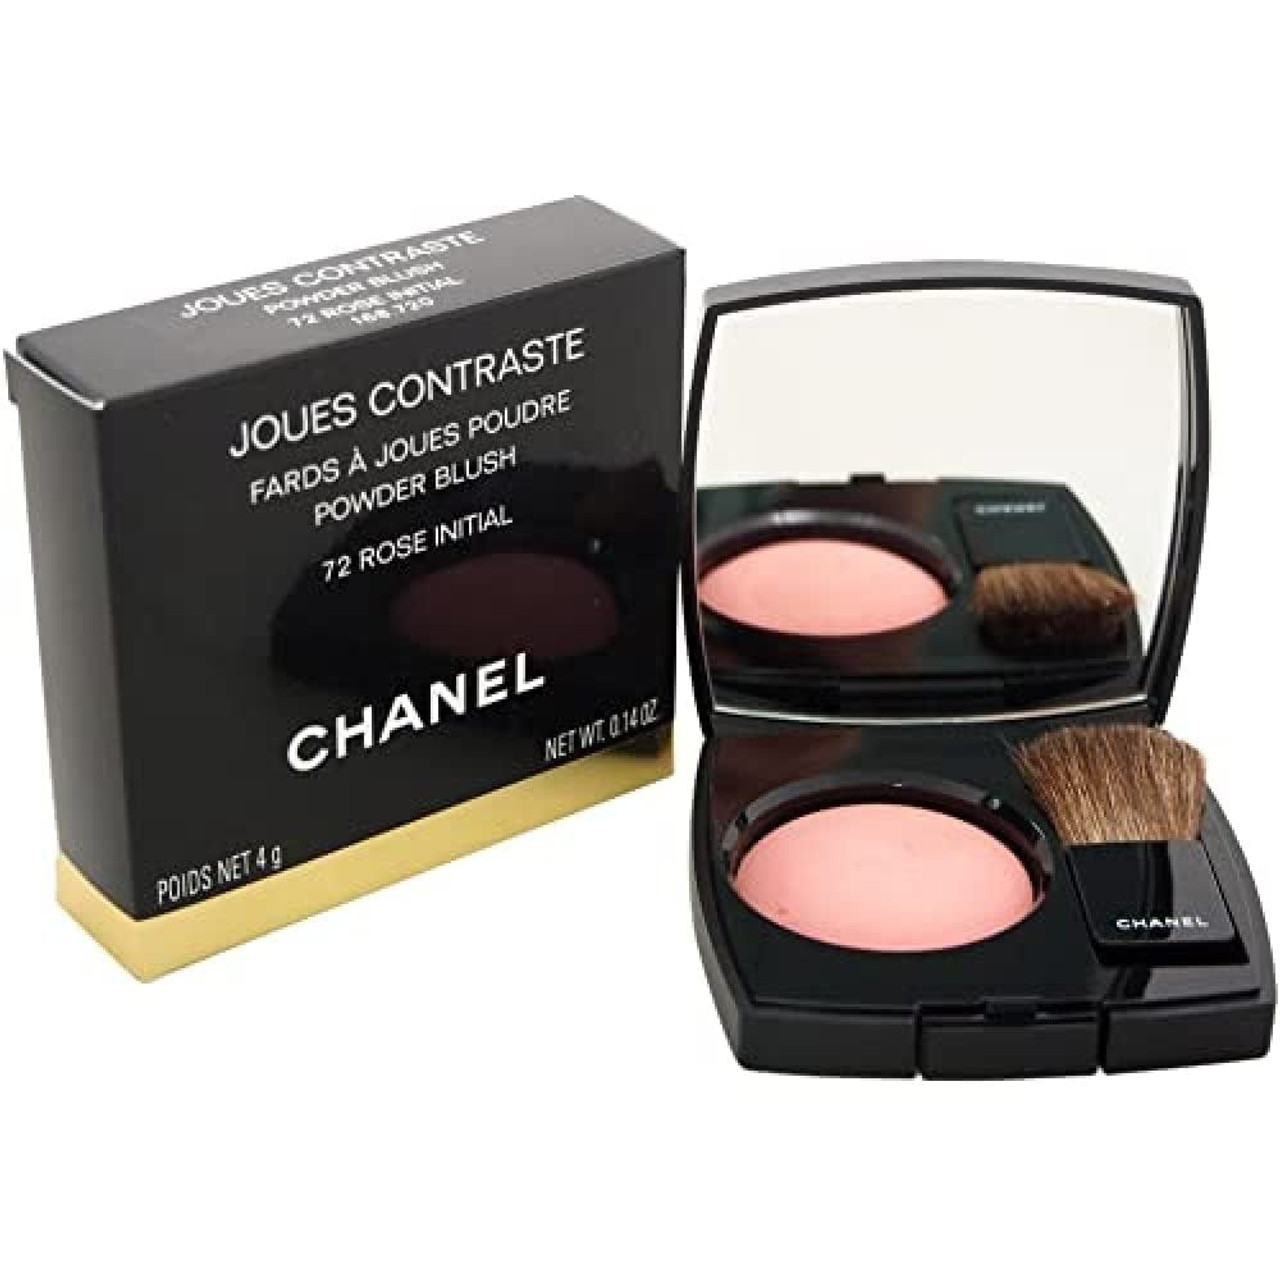 Chanel Joues Contraste Powder Blush No. 72 Rose Initial for Women Blush  0.18 Ounce